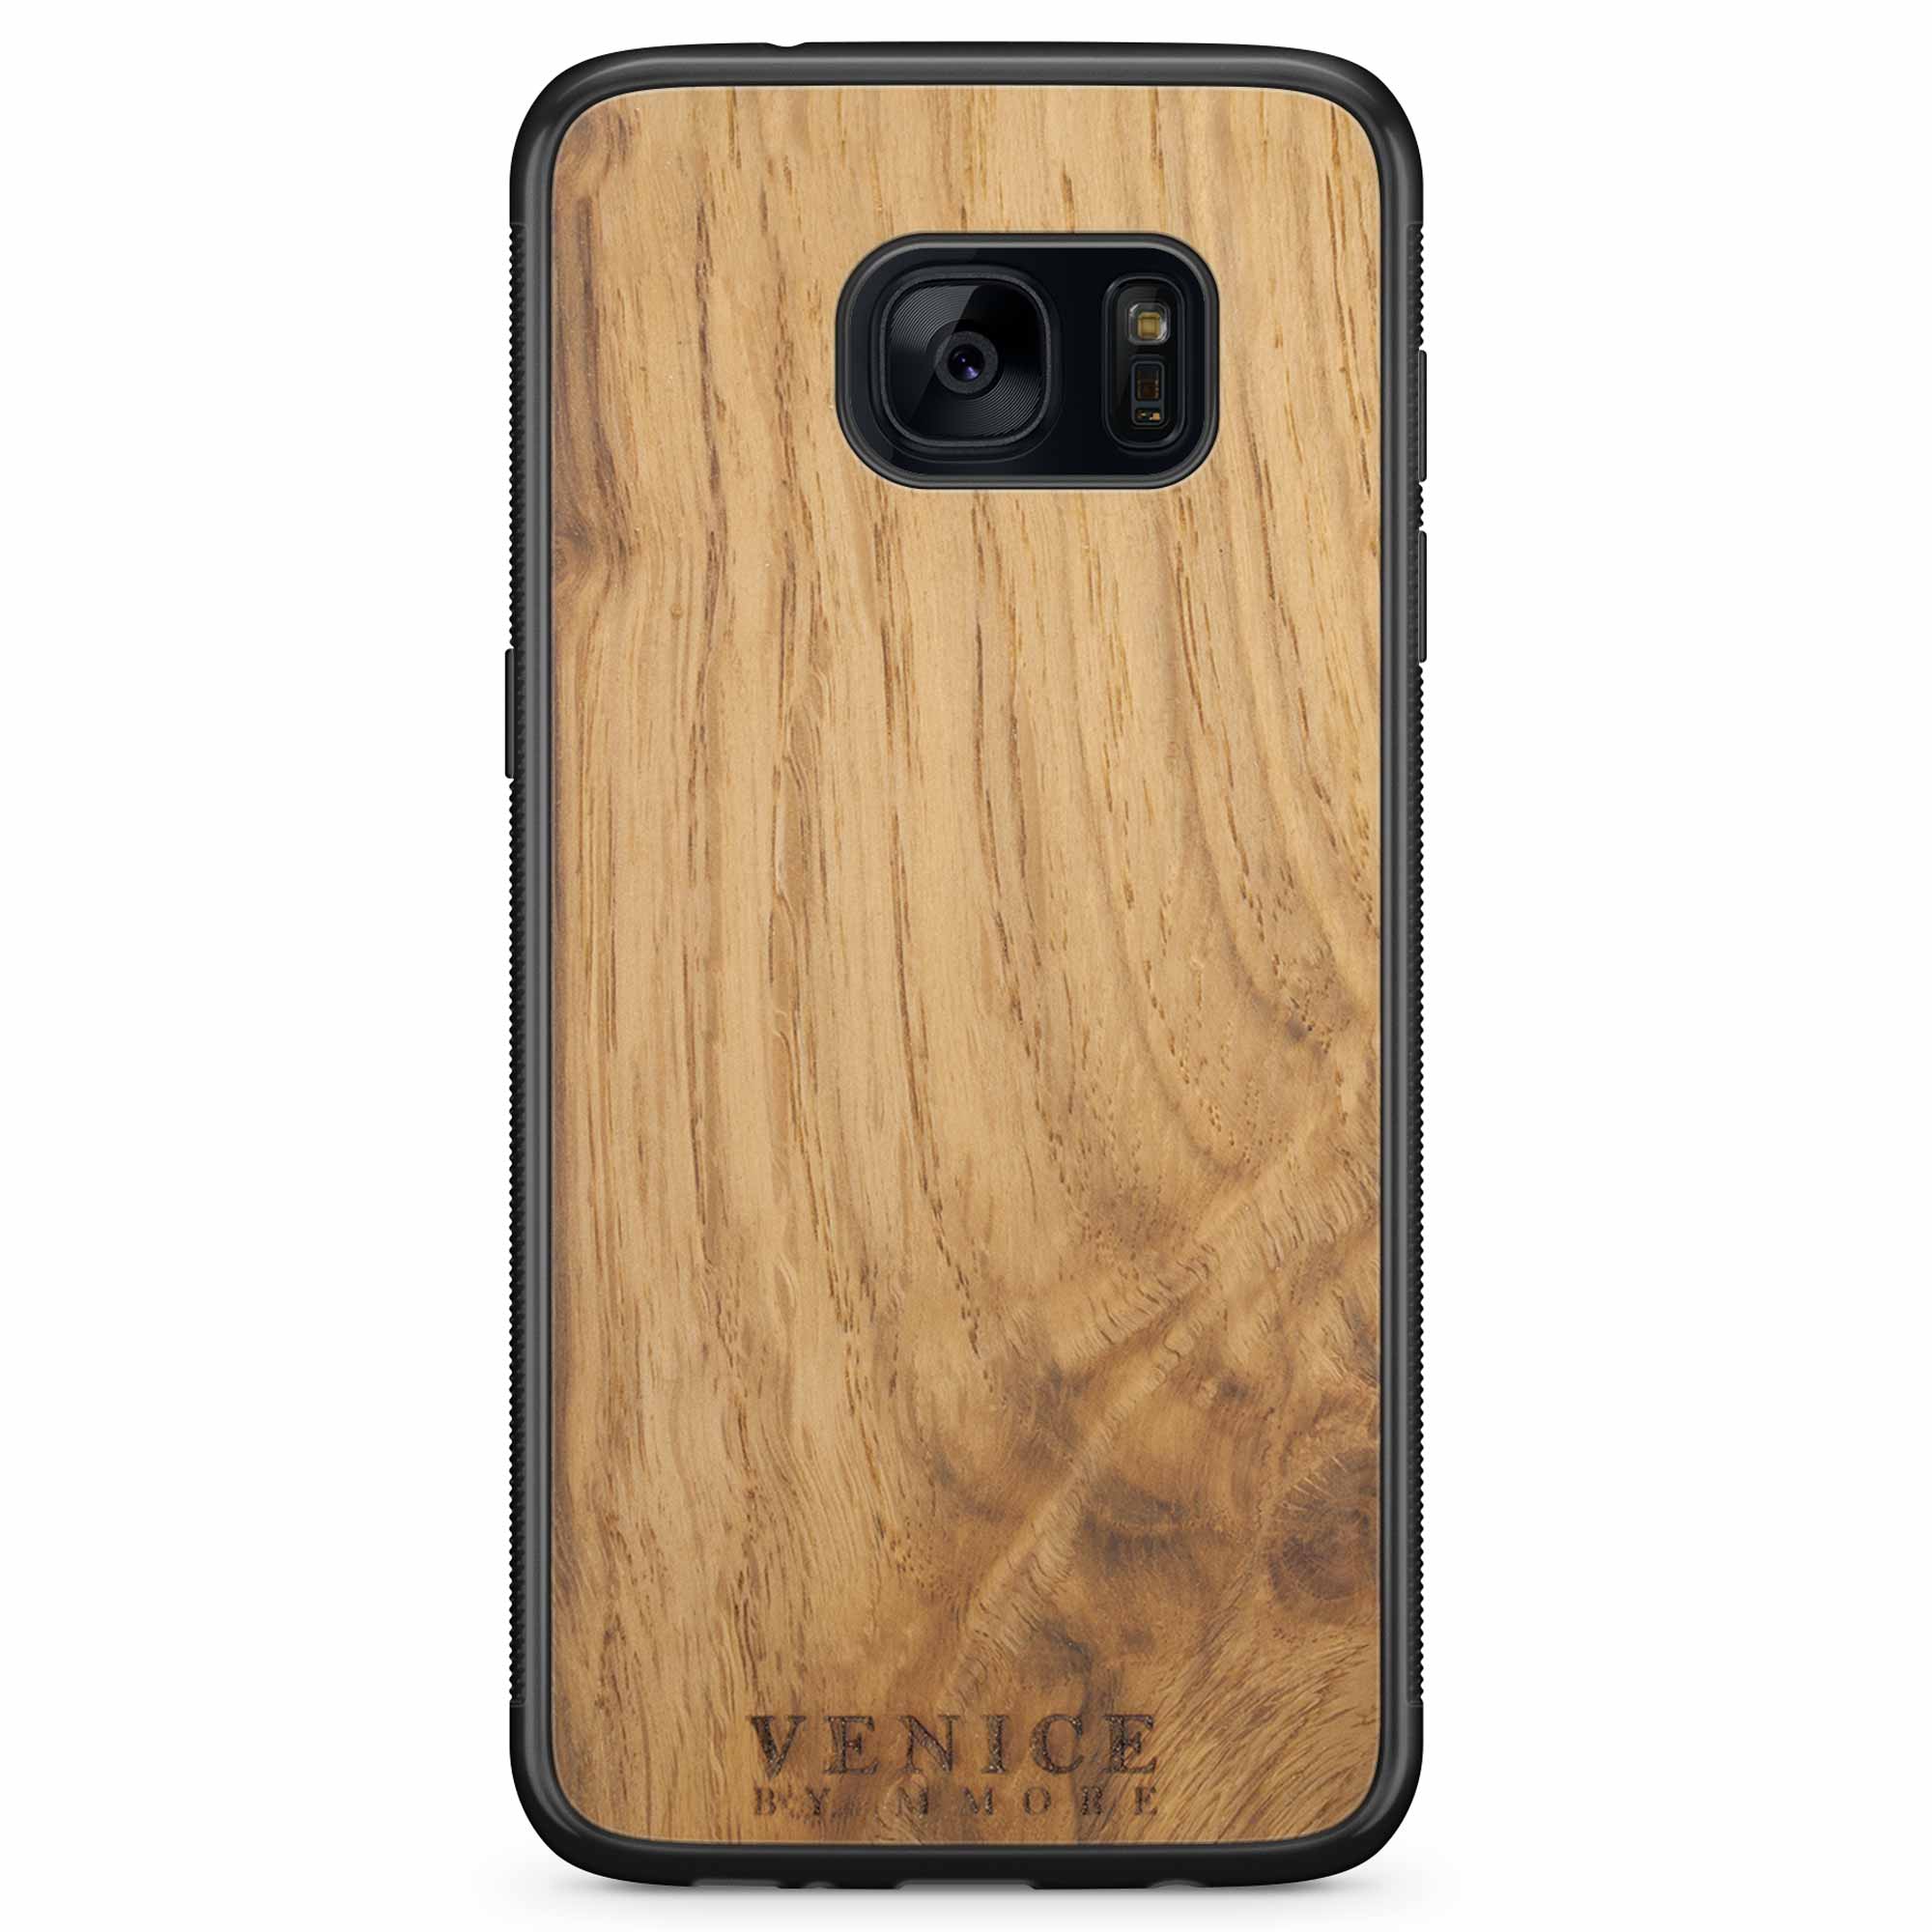 Samsung S7 Holz Handyhülle mit Venedig-Schriftzug